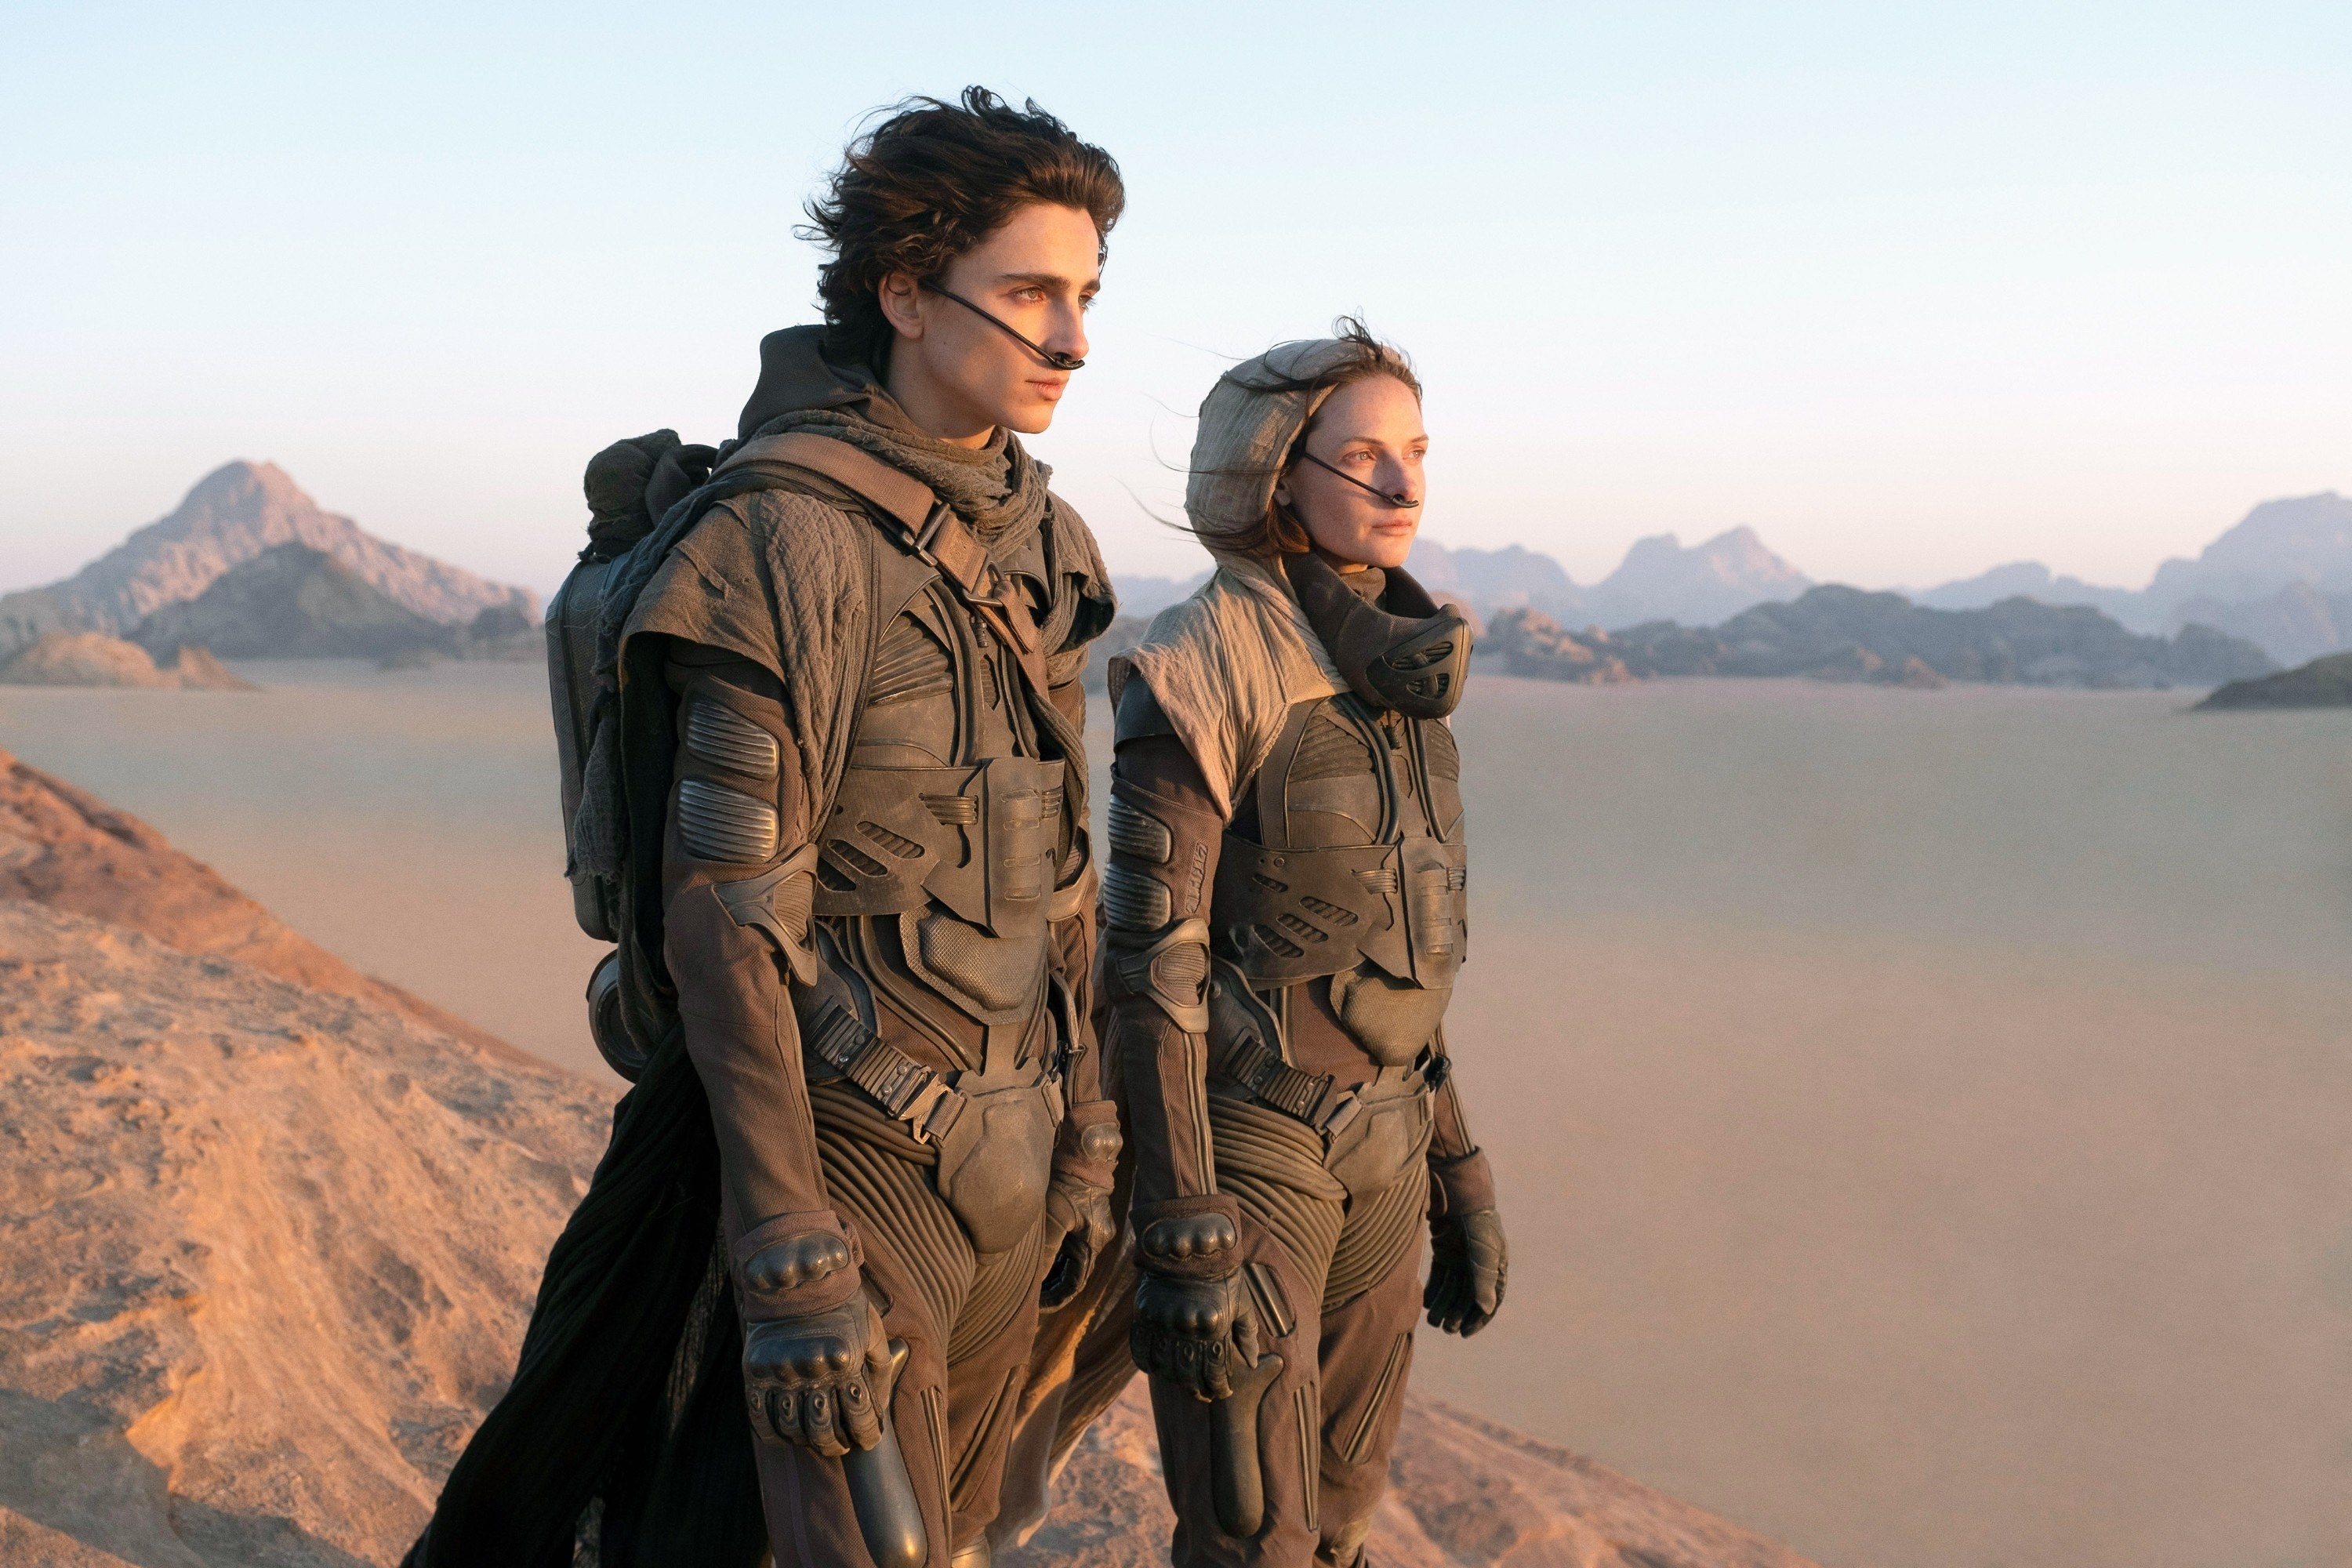 Timothee Chalamet and Rebecca Ferguson stand overlooking the desert